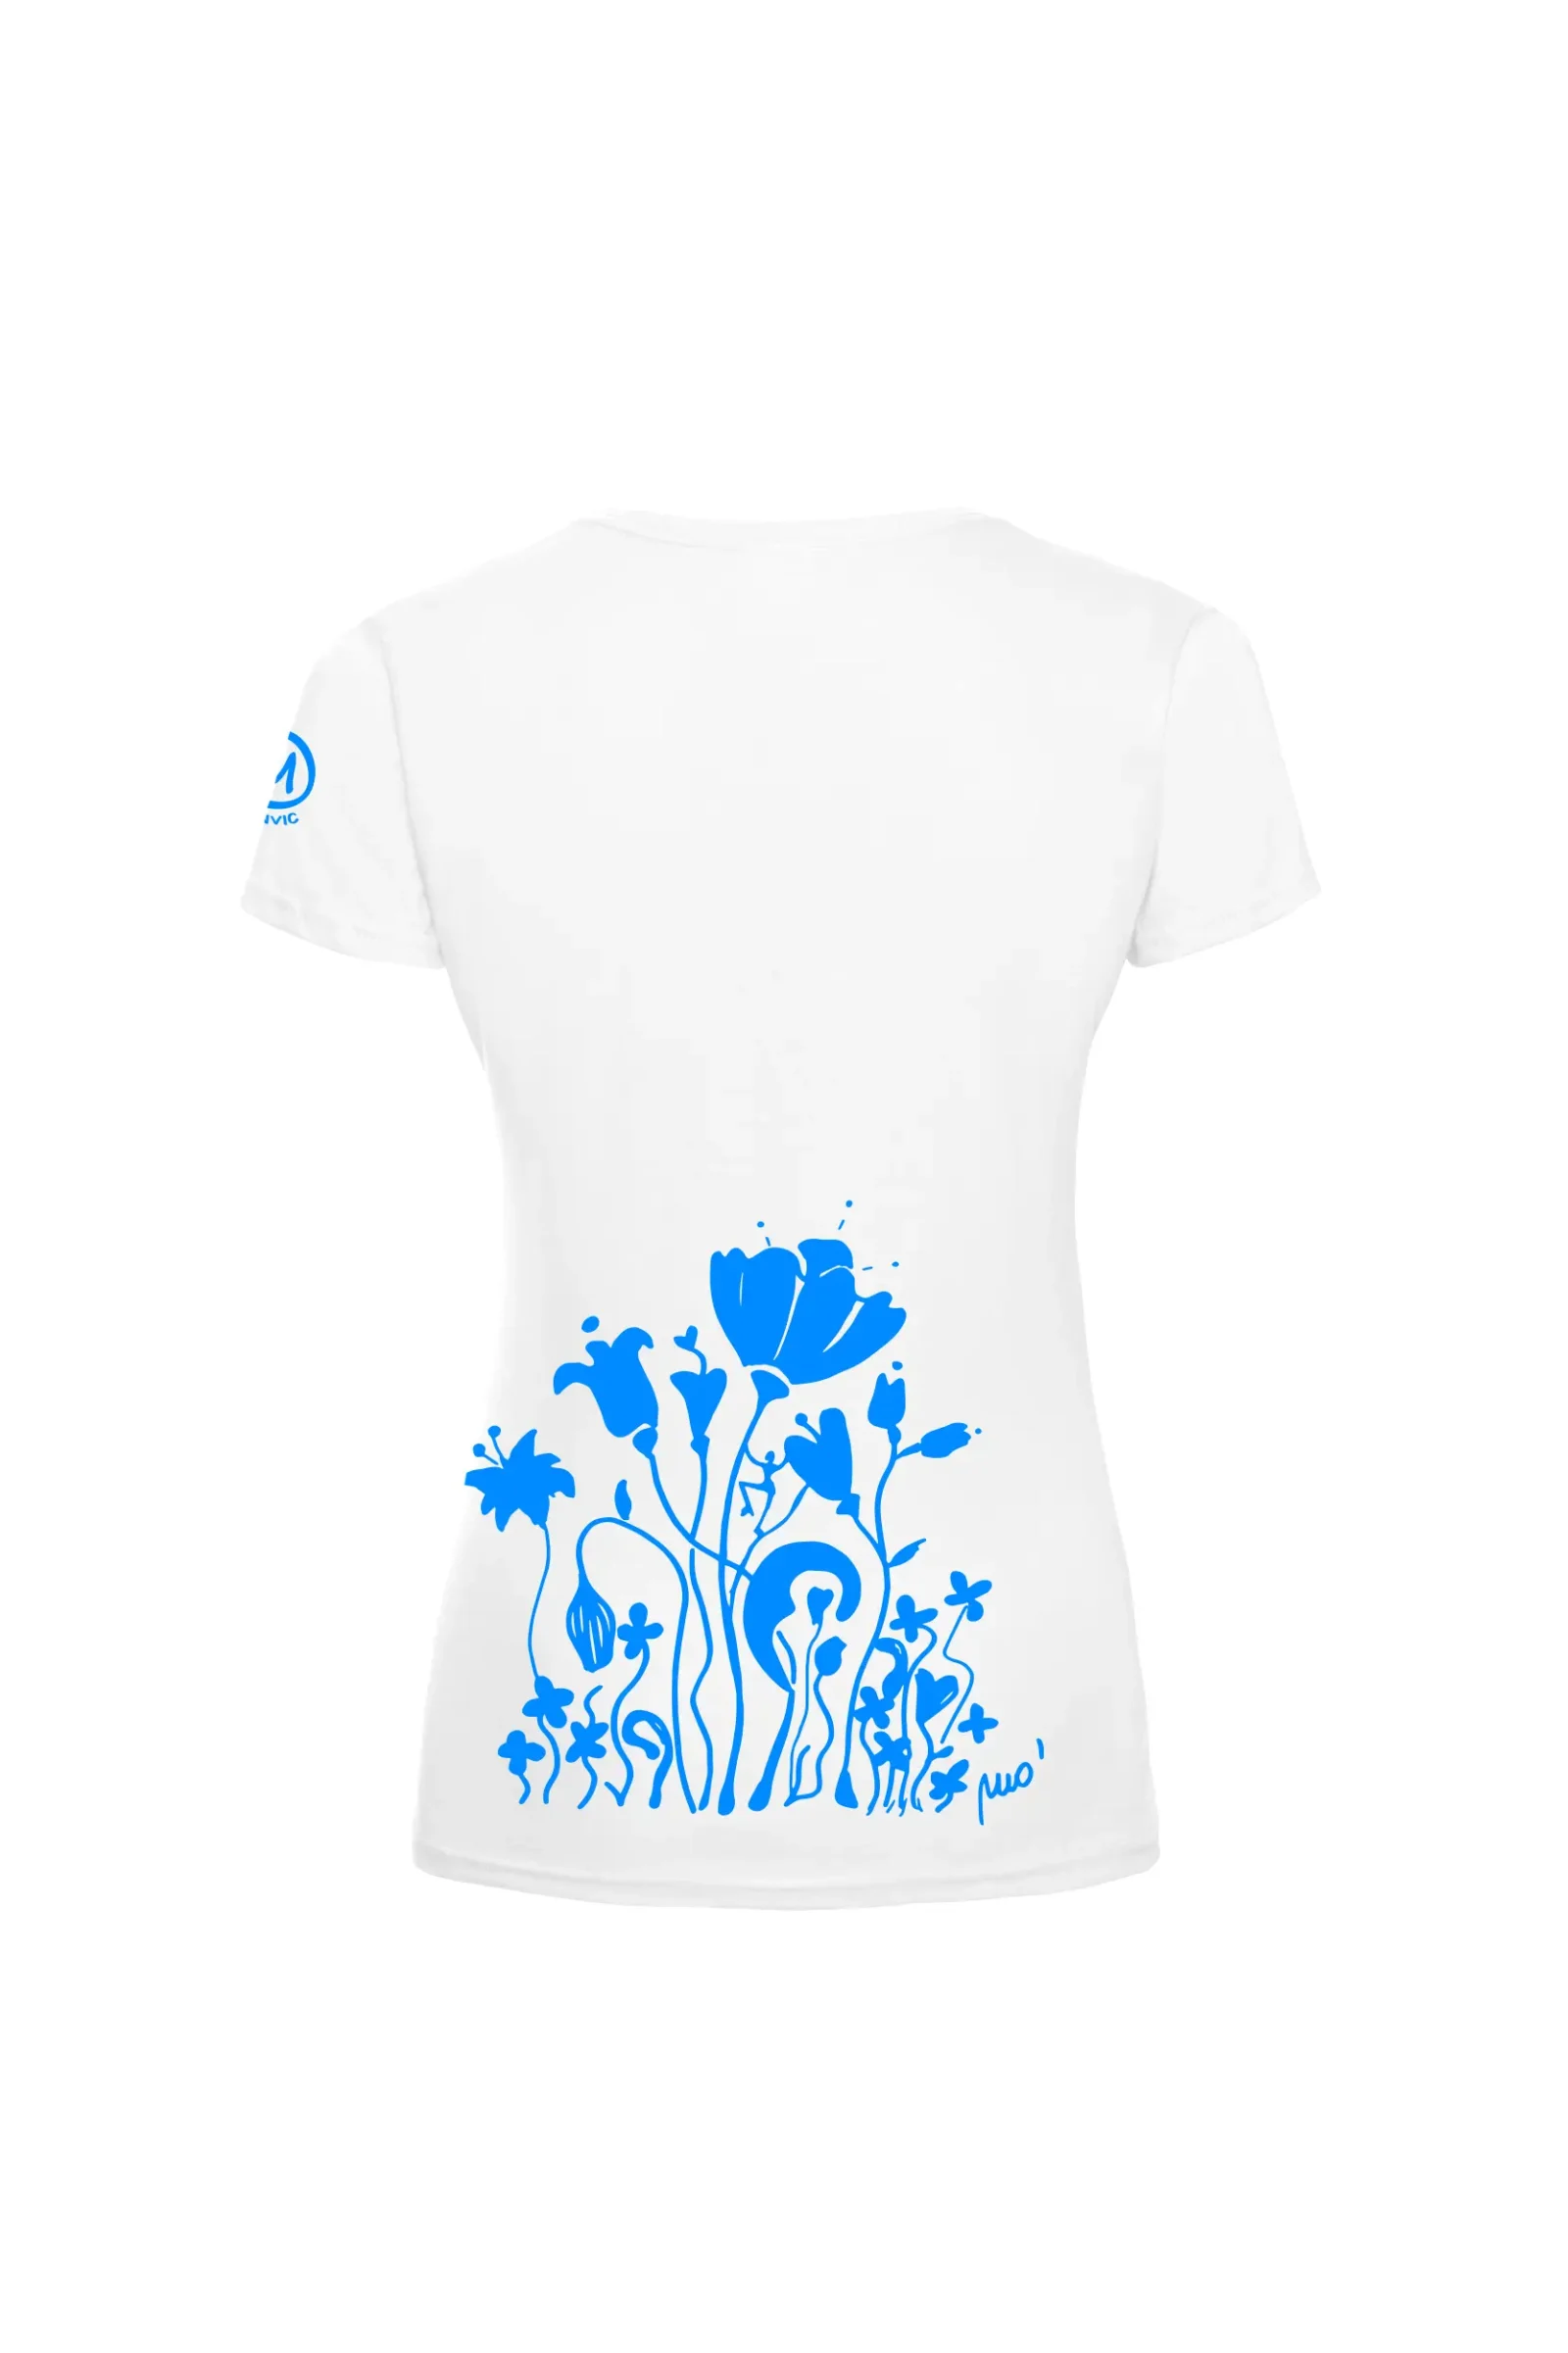 Women's climbing t-shirt - white cotton - "Forest" graphics - SHARON MONVIC